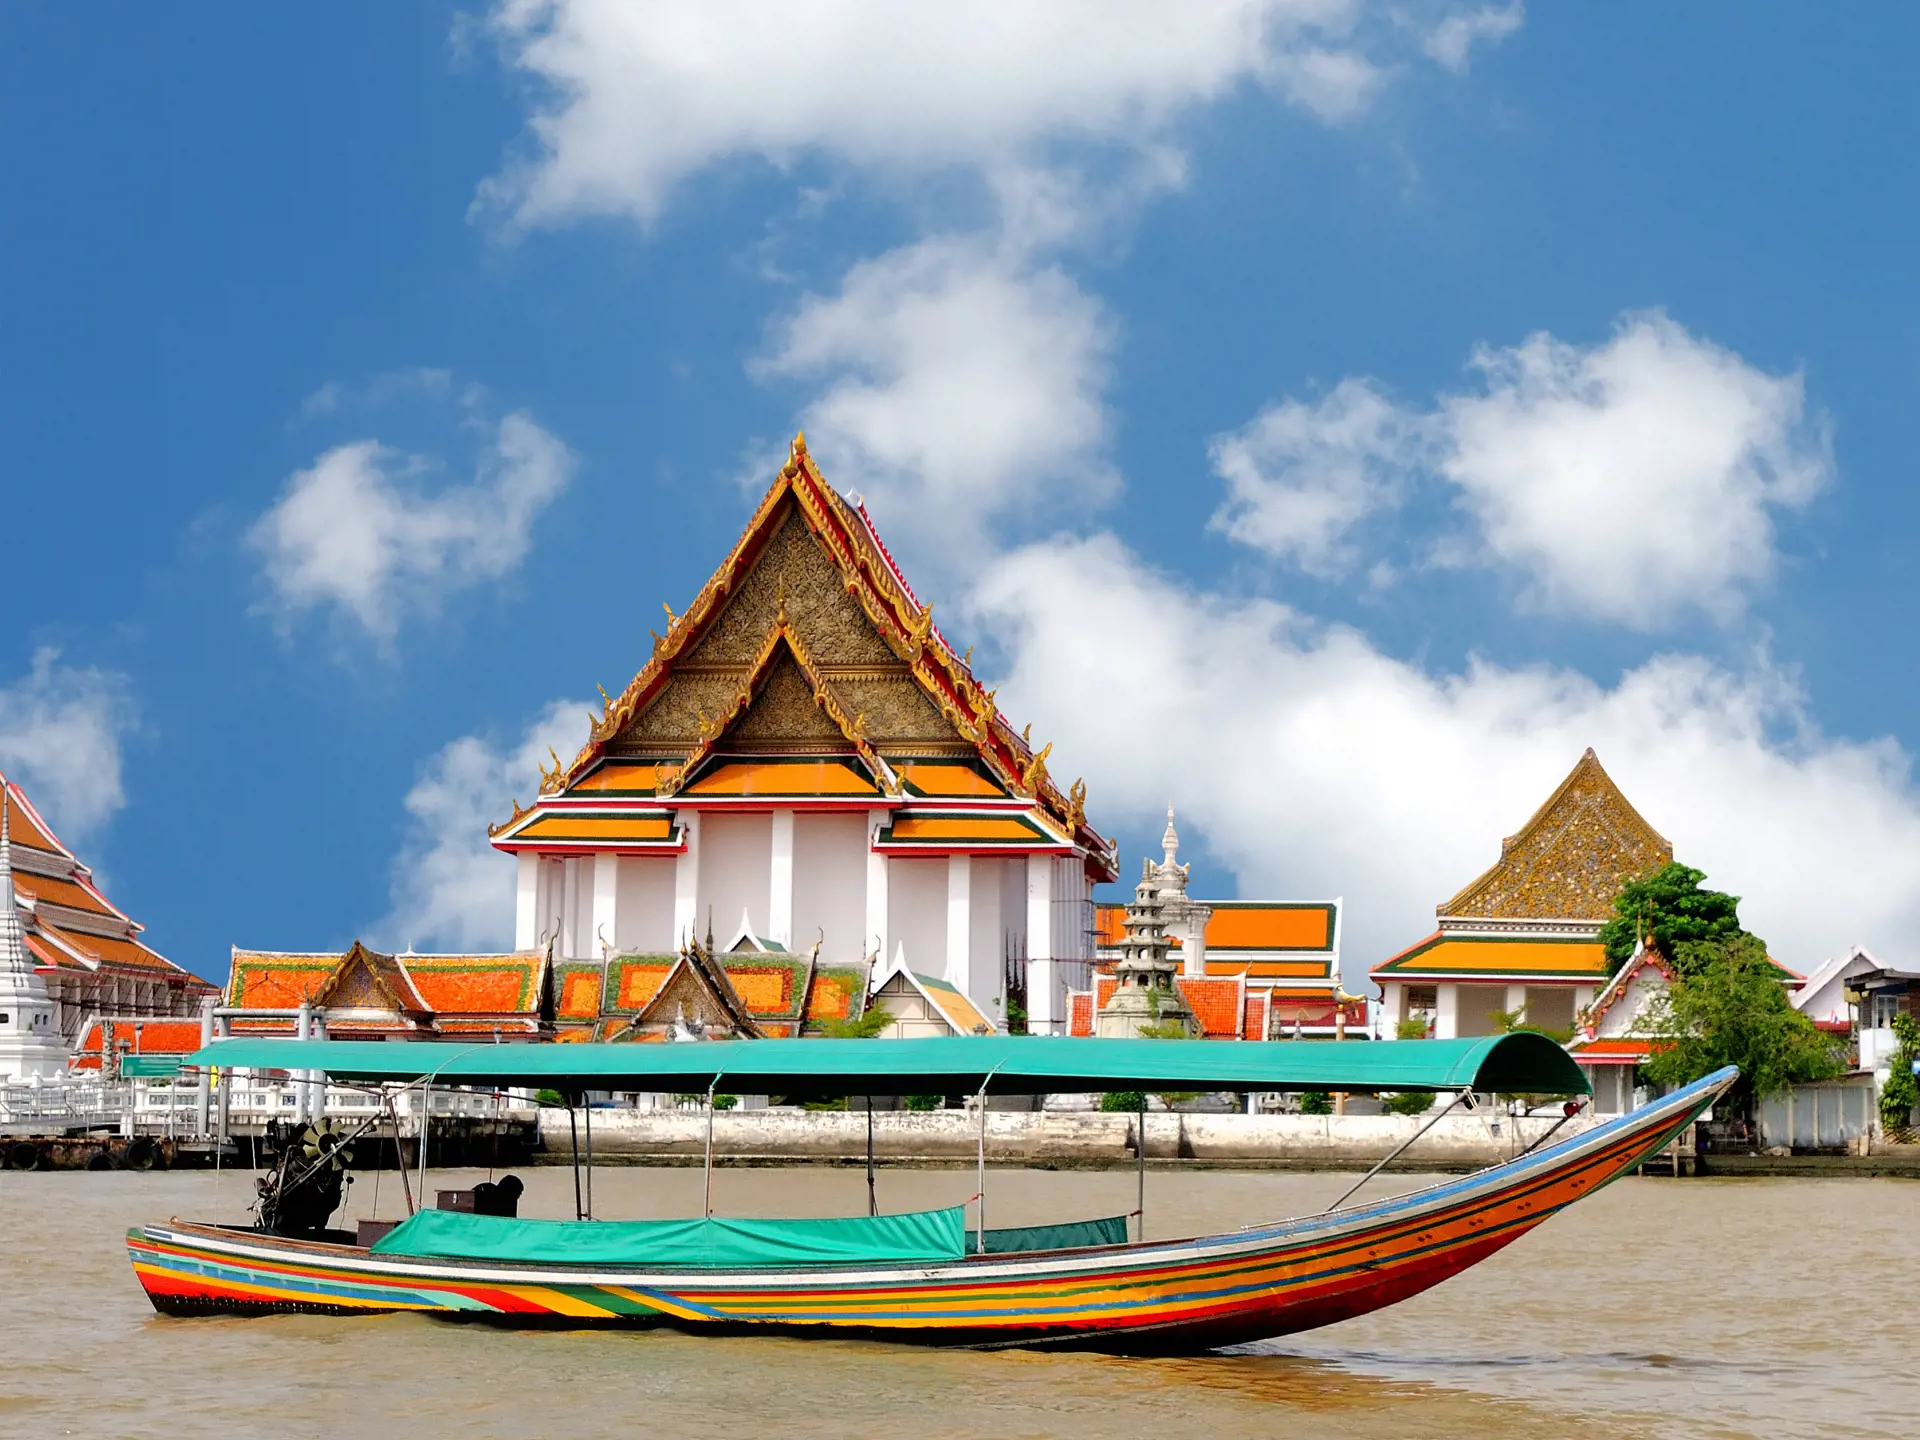 Thailand_Bangkok_Boat on the river Chao Phraya_58663423.jpg